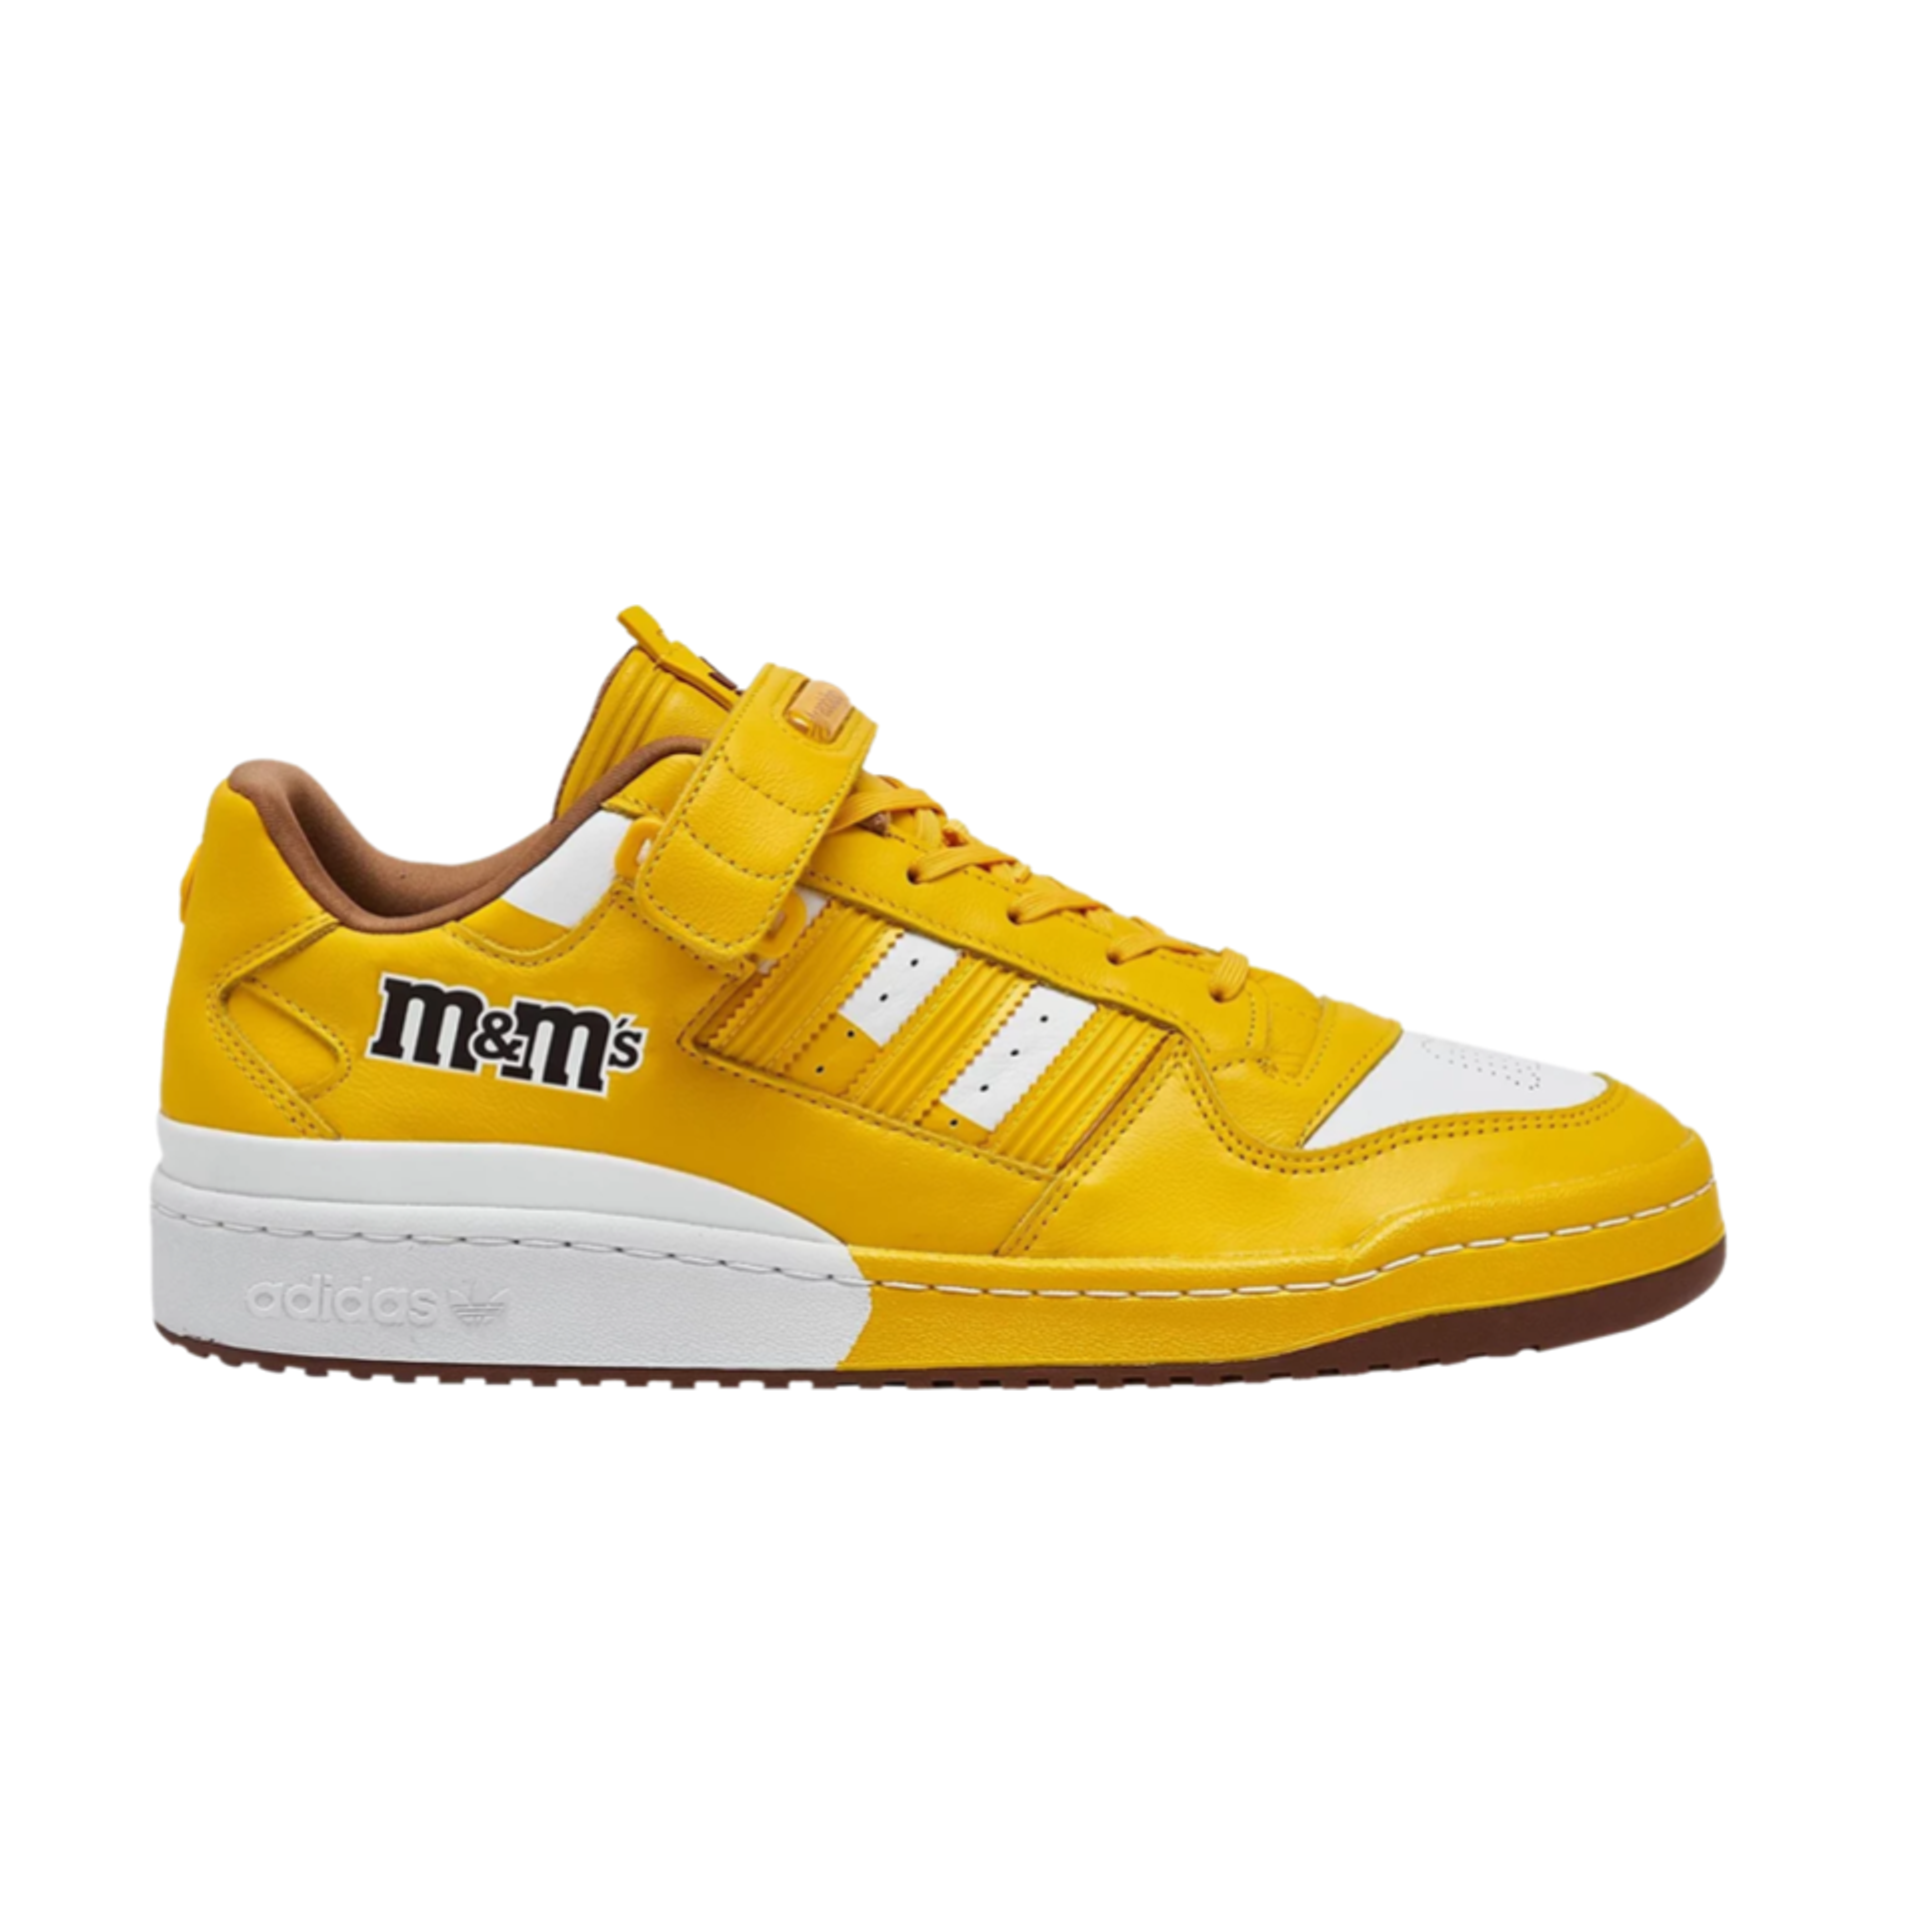 adidas M&M's x Forum '84 Low 'Yellow'